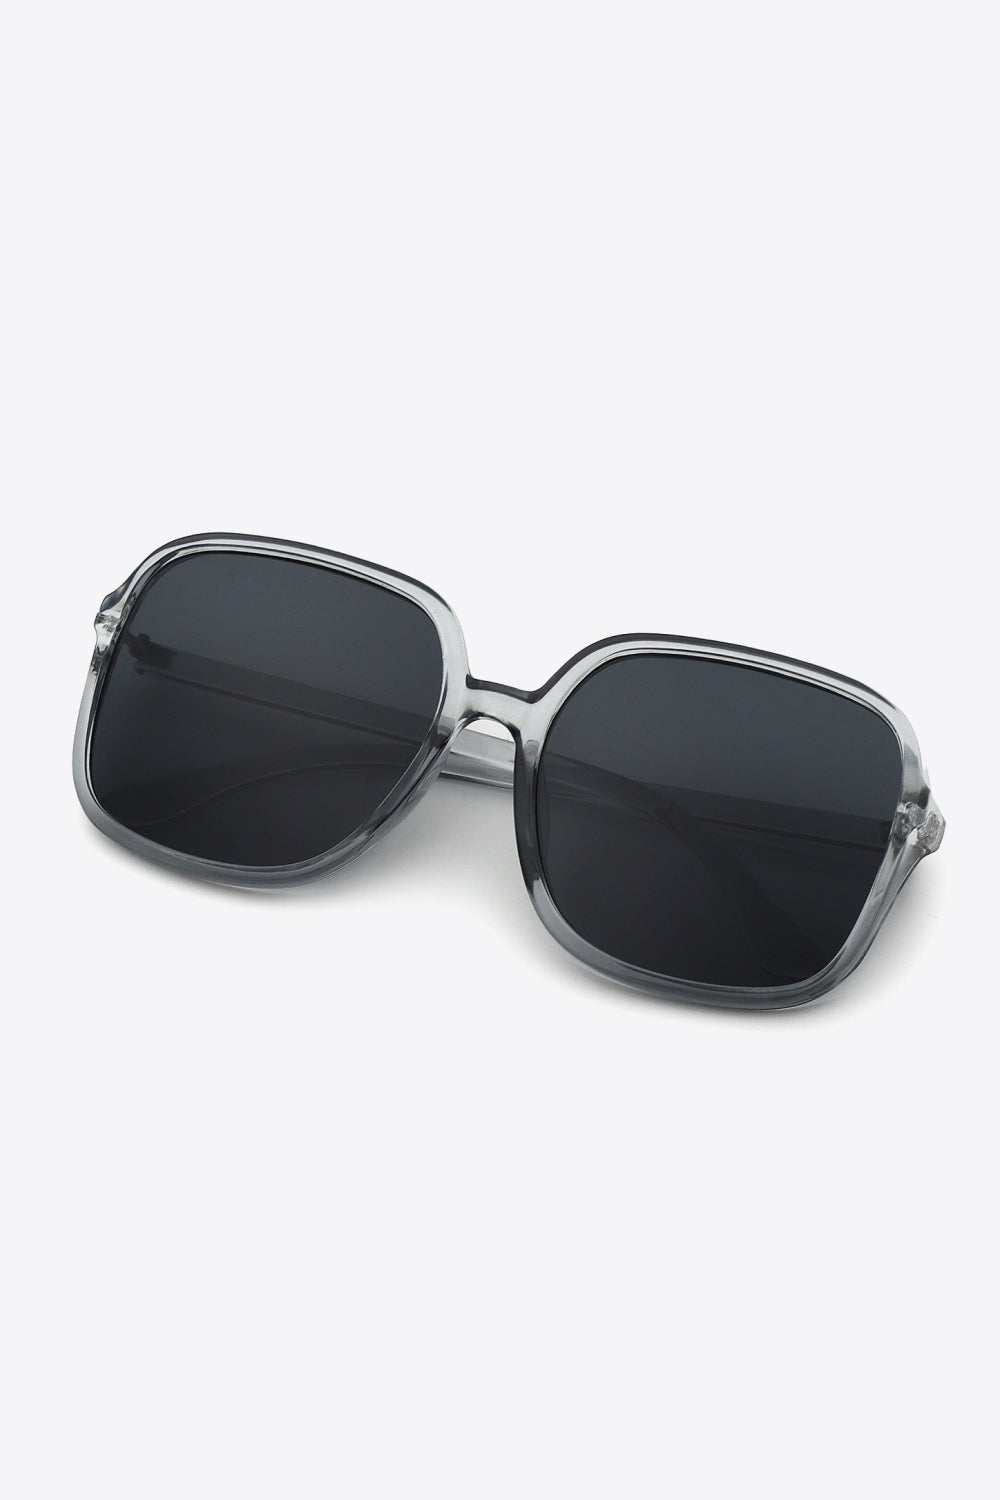 Polycarbonate Square Sunglasses - BEAUTY COSMOTICS SHOP